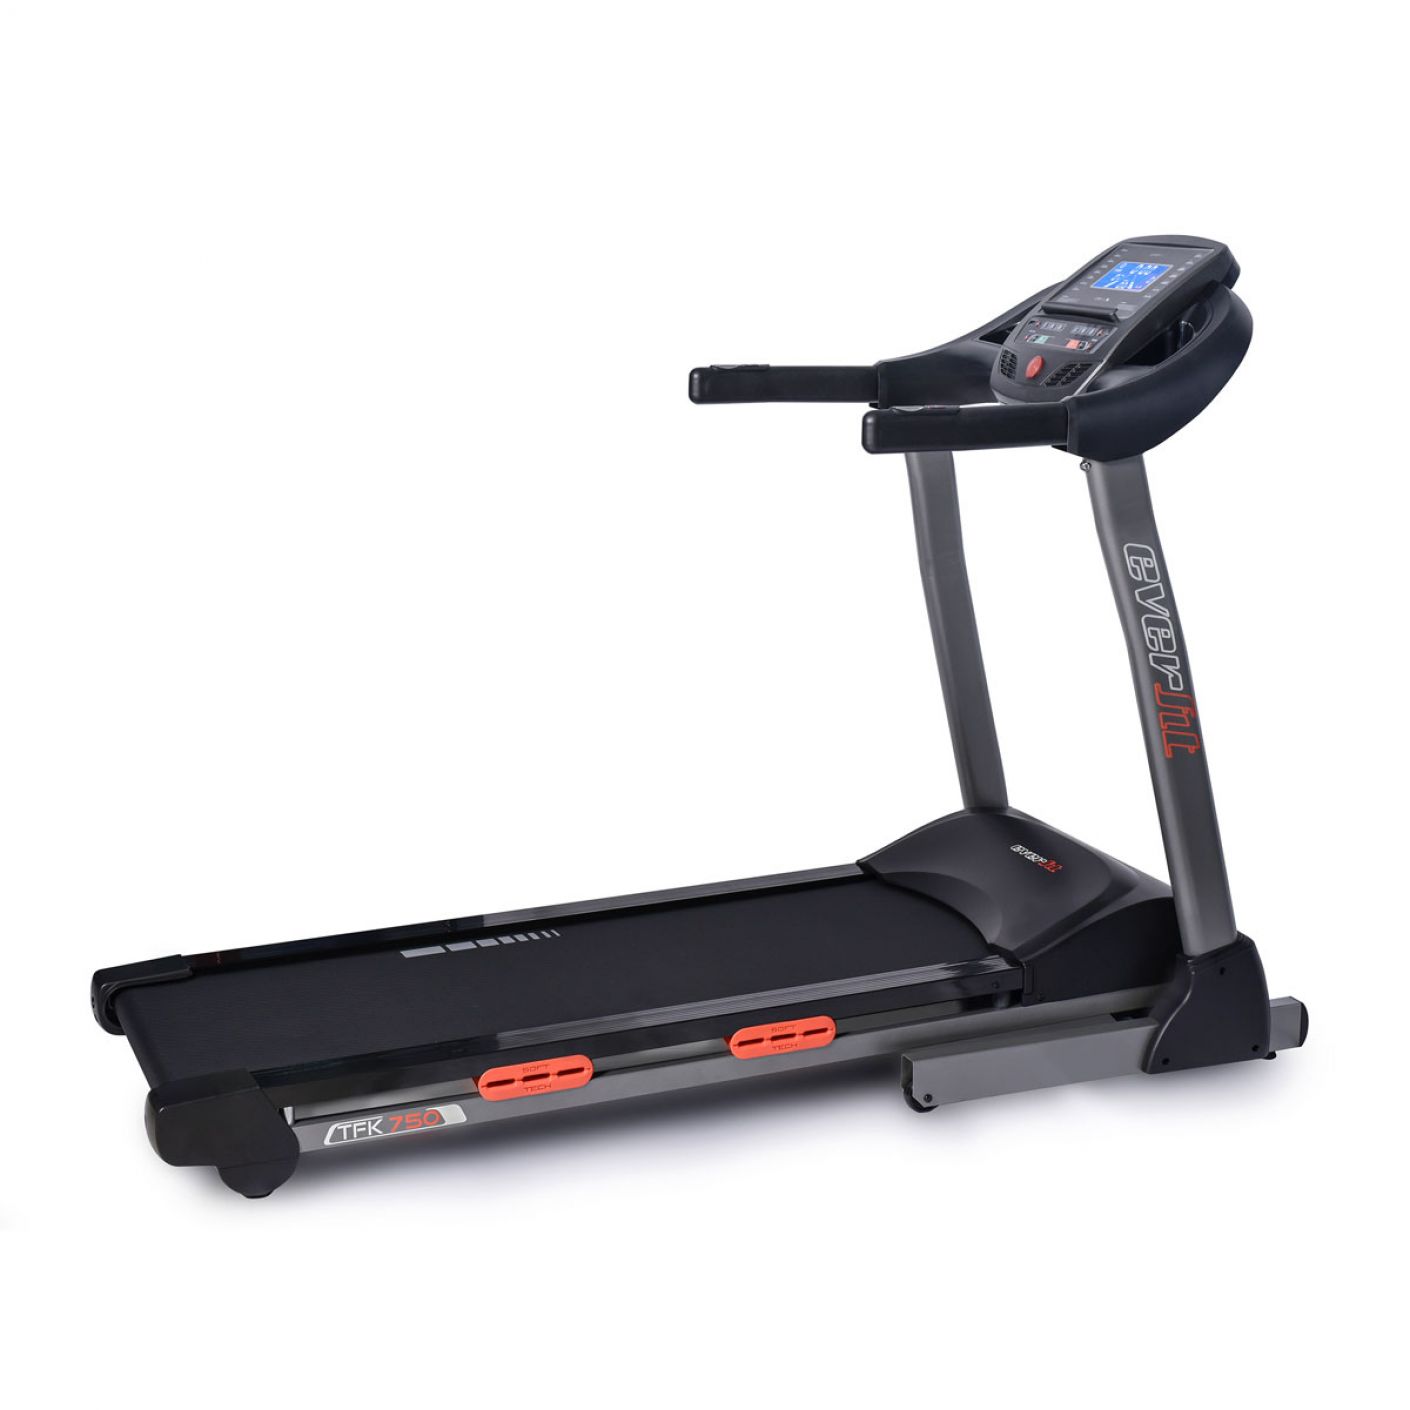 Everfit Treadmill TFK-750 HRC APP Ready 2.0